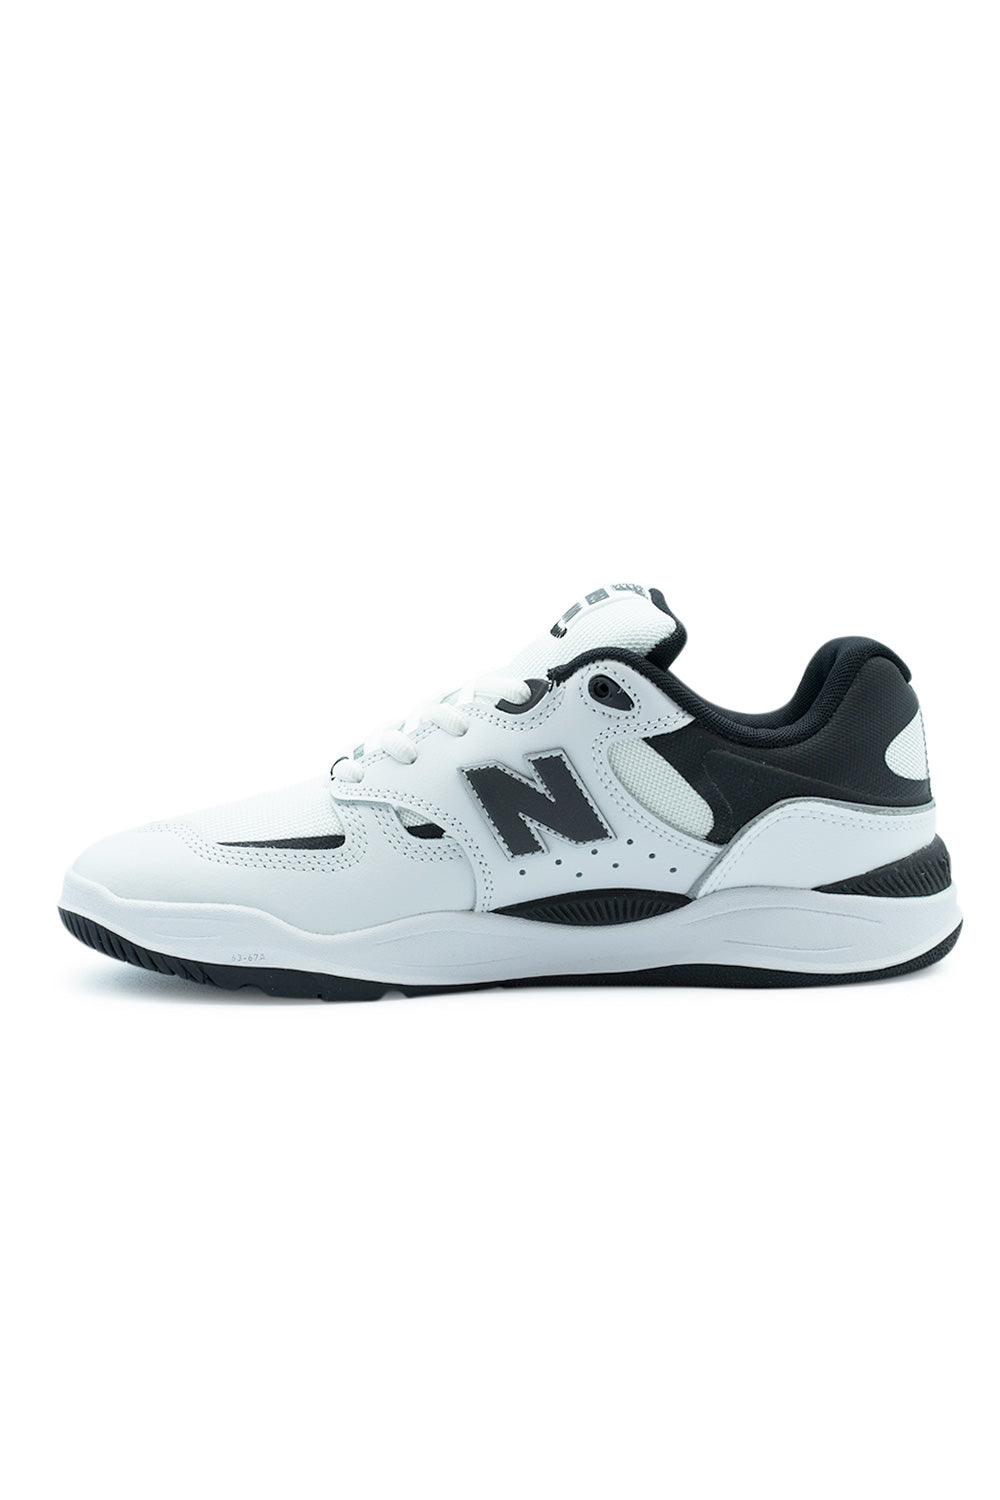 New Balance Numeric 1010 Shoe White / Black - BONKERS